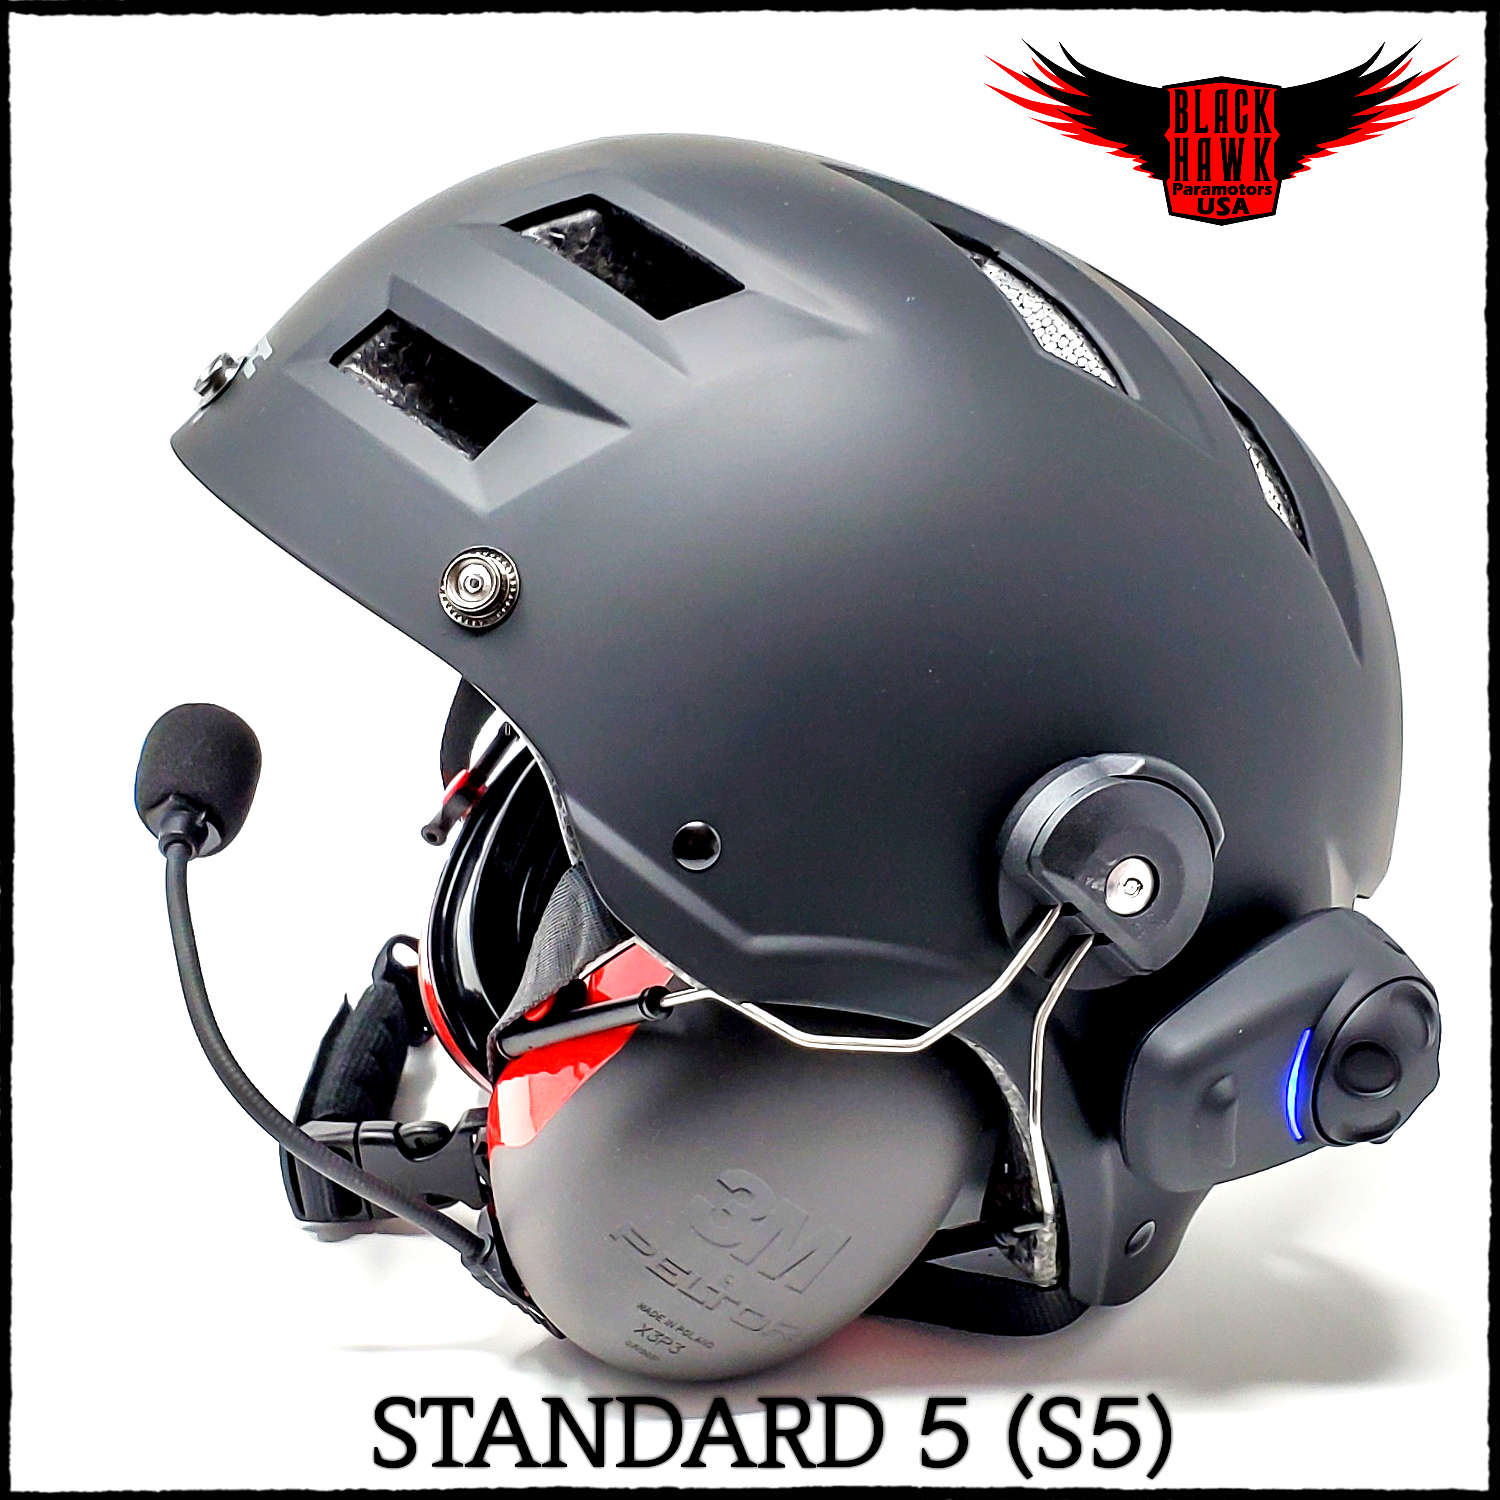 Helmet for Paramotor Pilots 